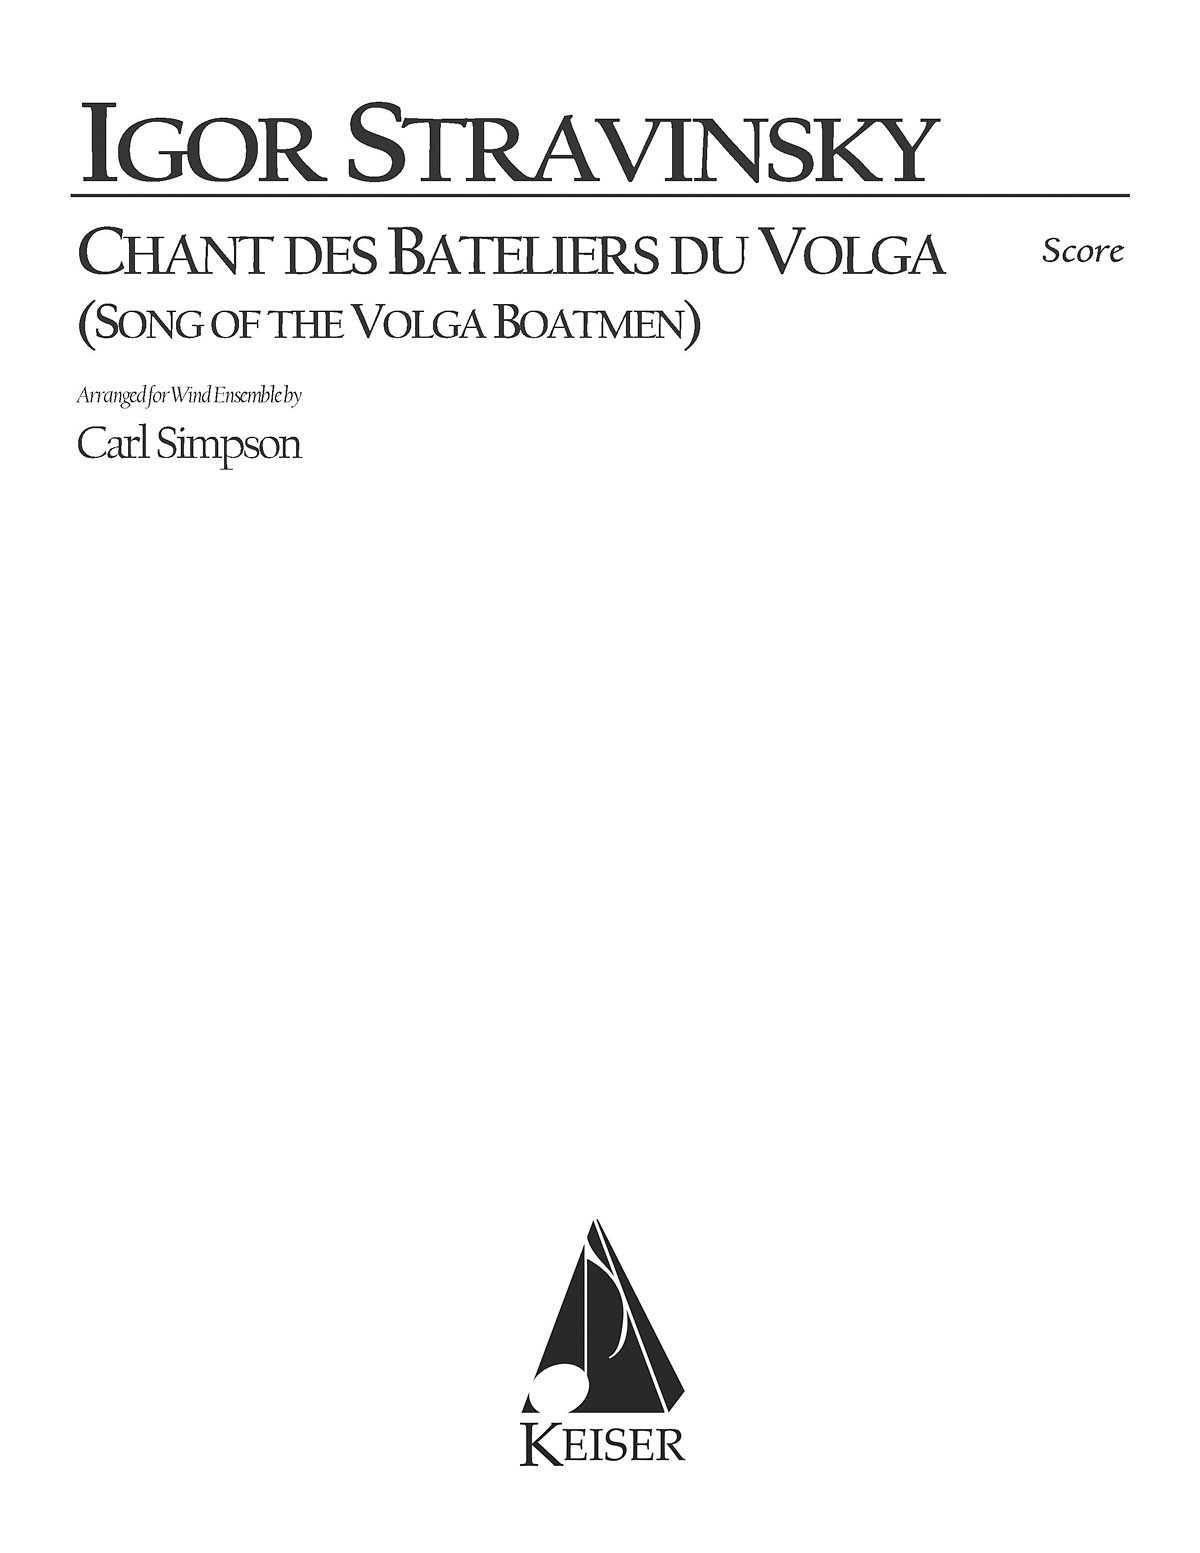 Igor Stravinsky: Chant des Bateliers du Volga: Wind Ensemble: Score